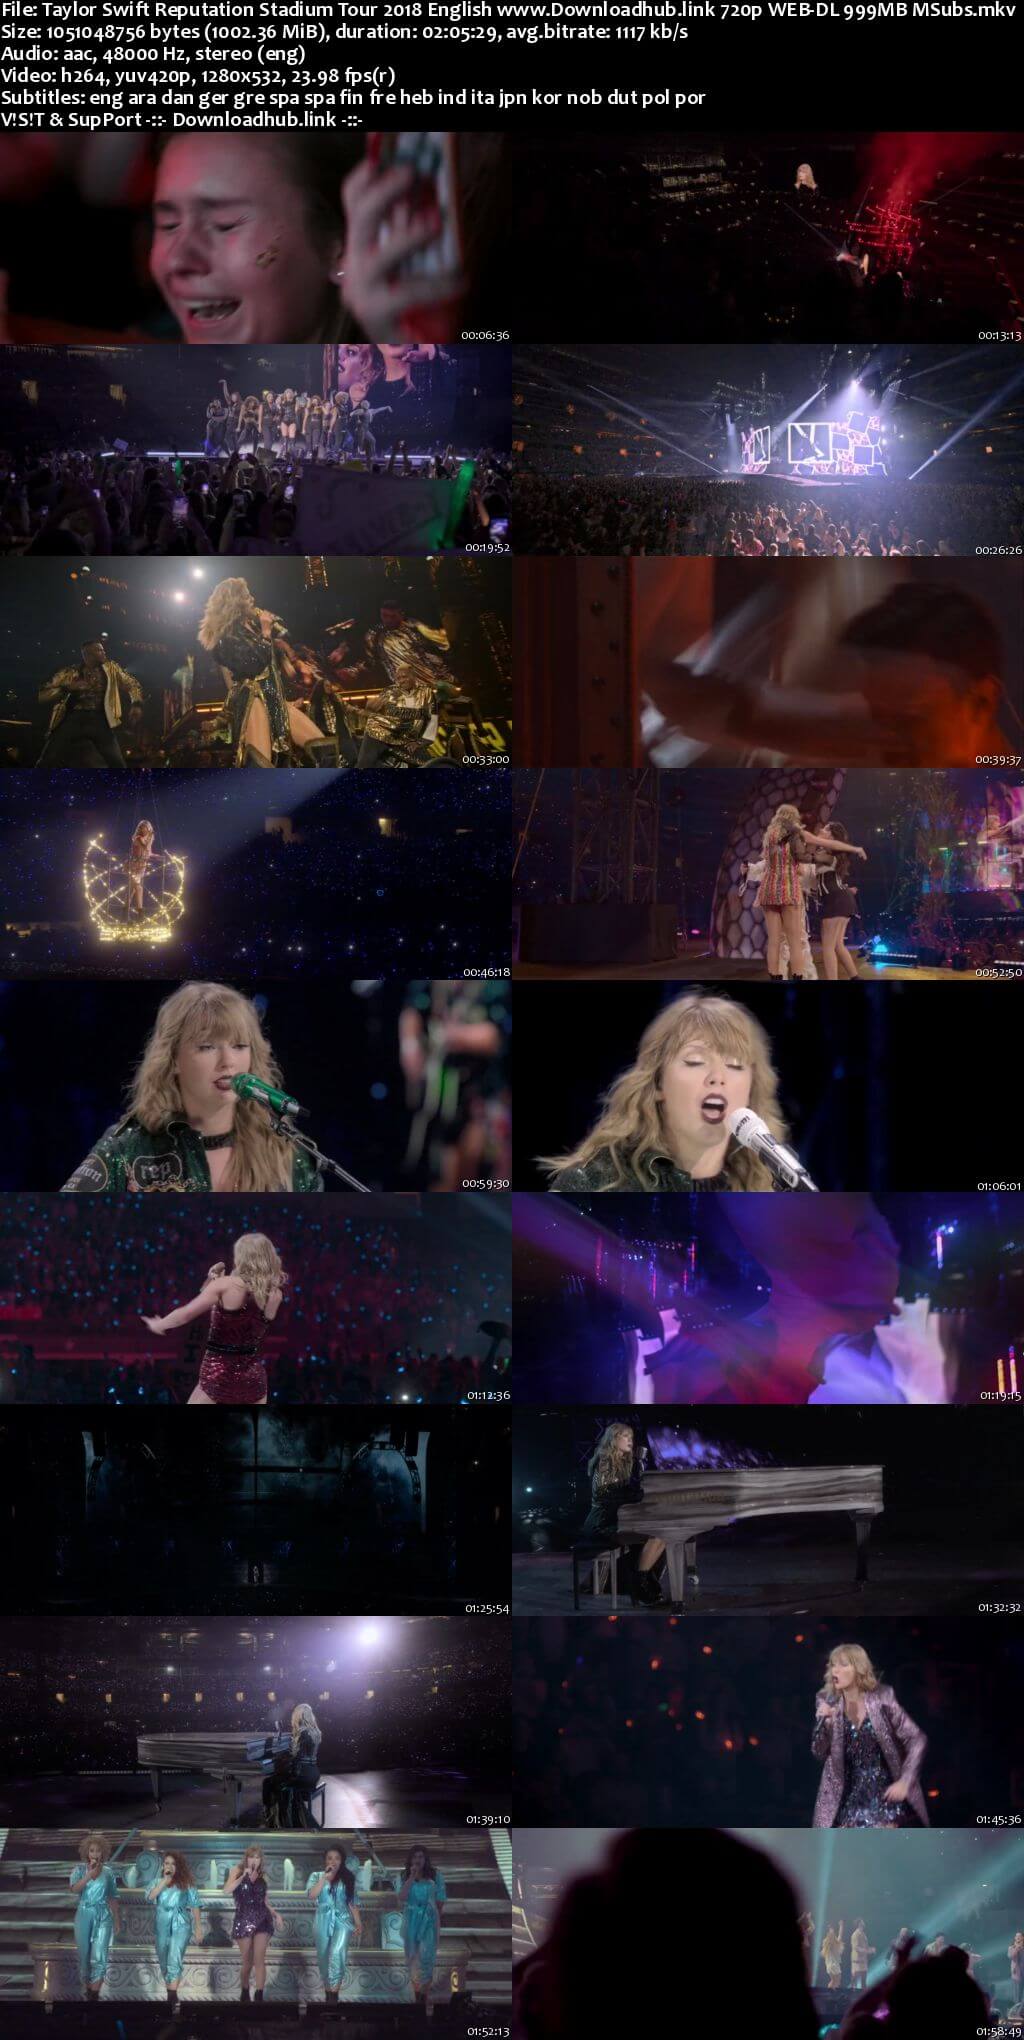 Taylor Swift Reputation Stadium Tour 2018 English 720p NF Web-DL 999MB MSubs